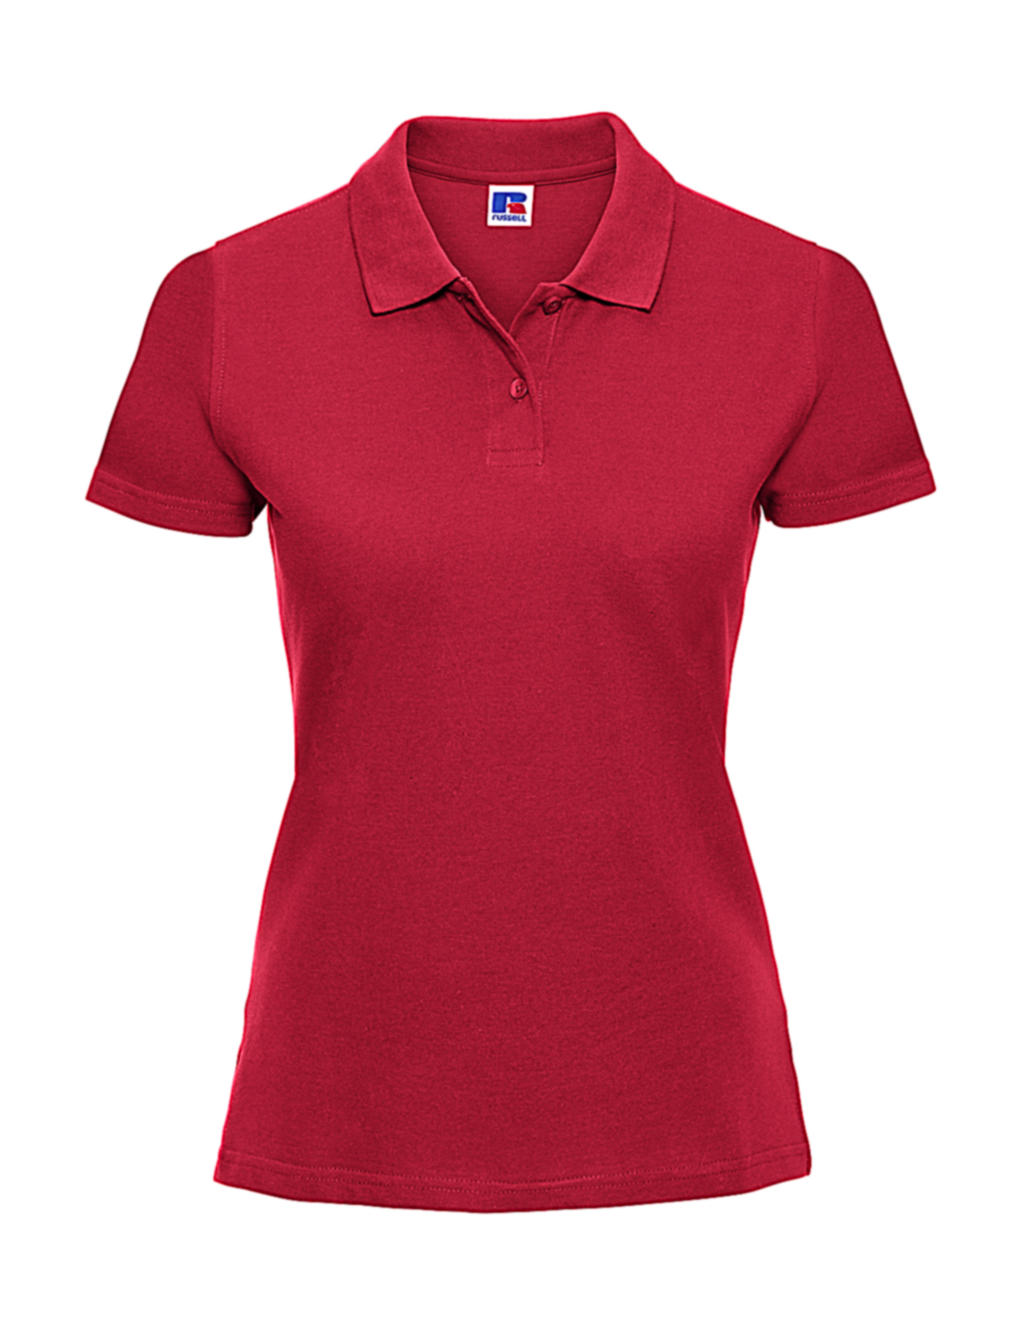  Ladies Classic Cotton Polo in Farbe Classic Red